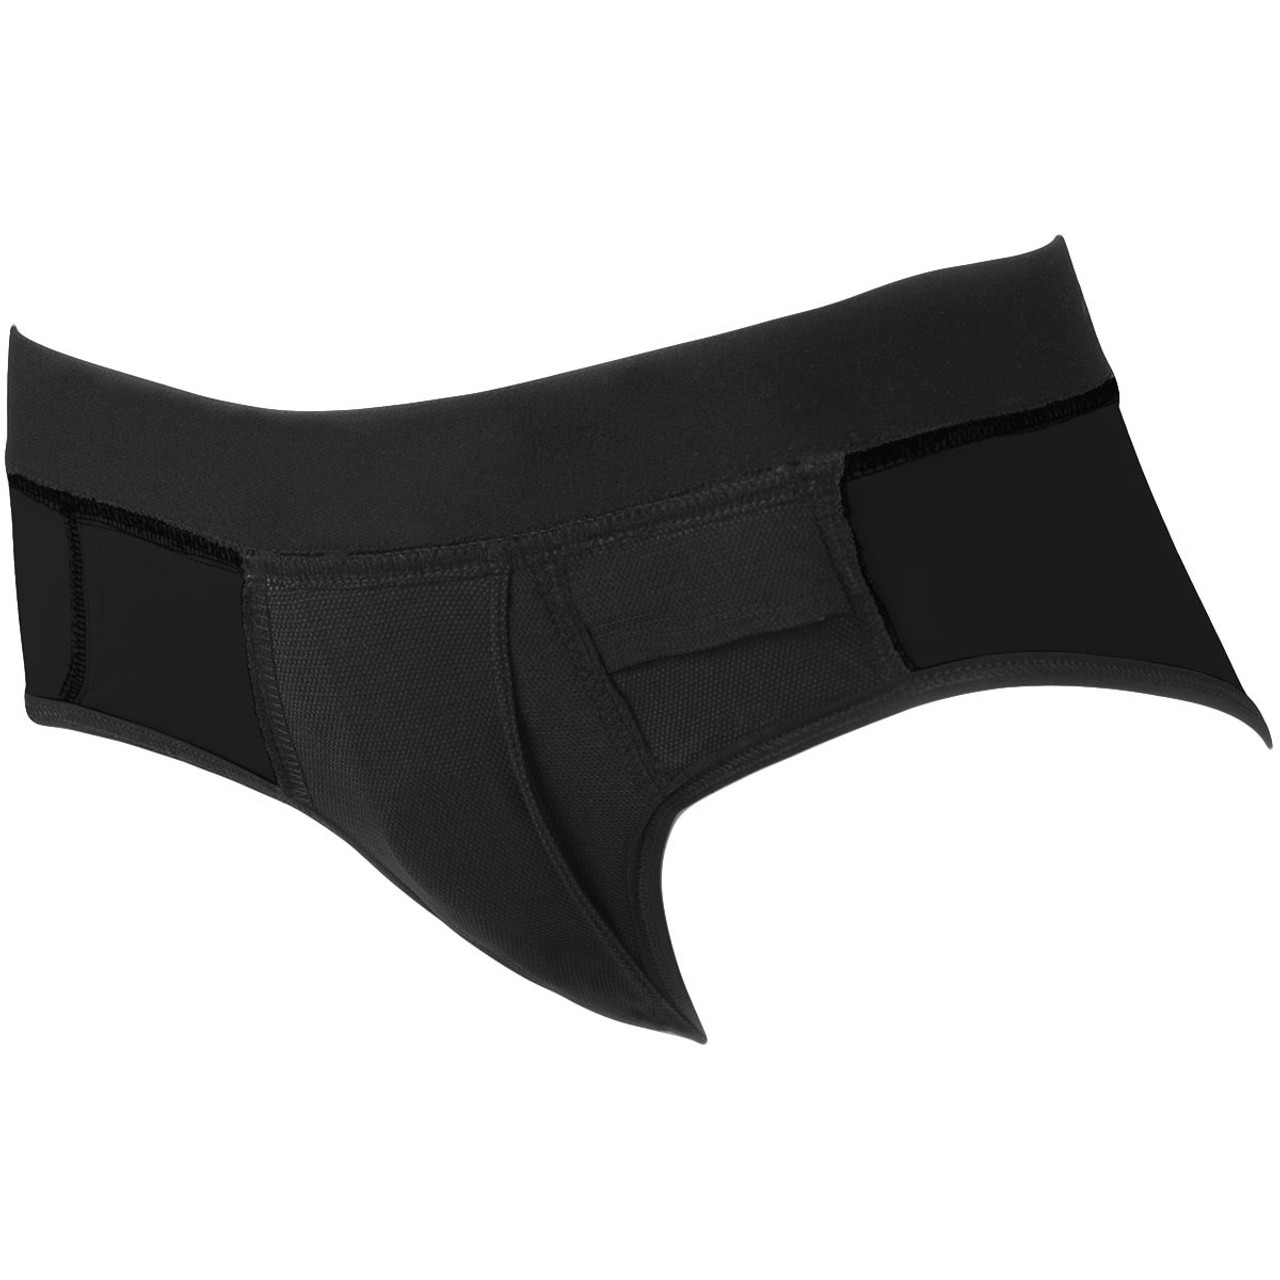 Men Hollow Out Underwear Briefs Lingerie Harness Belt Strap